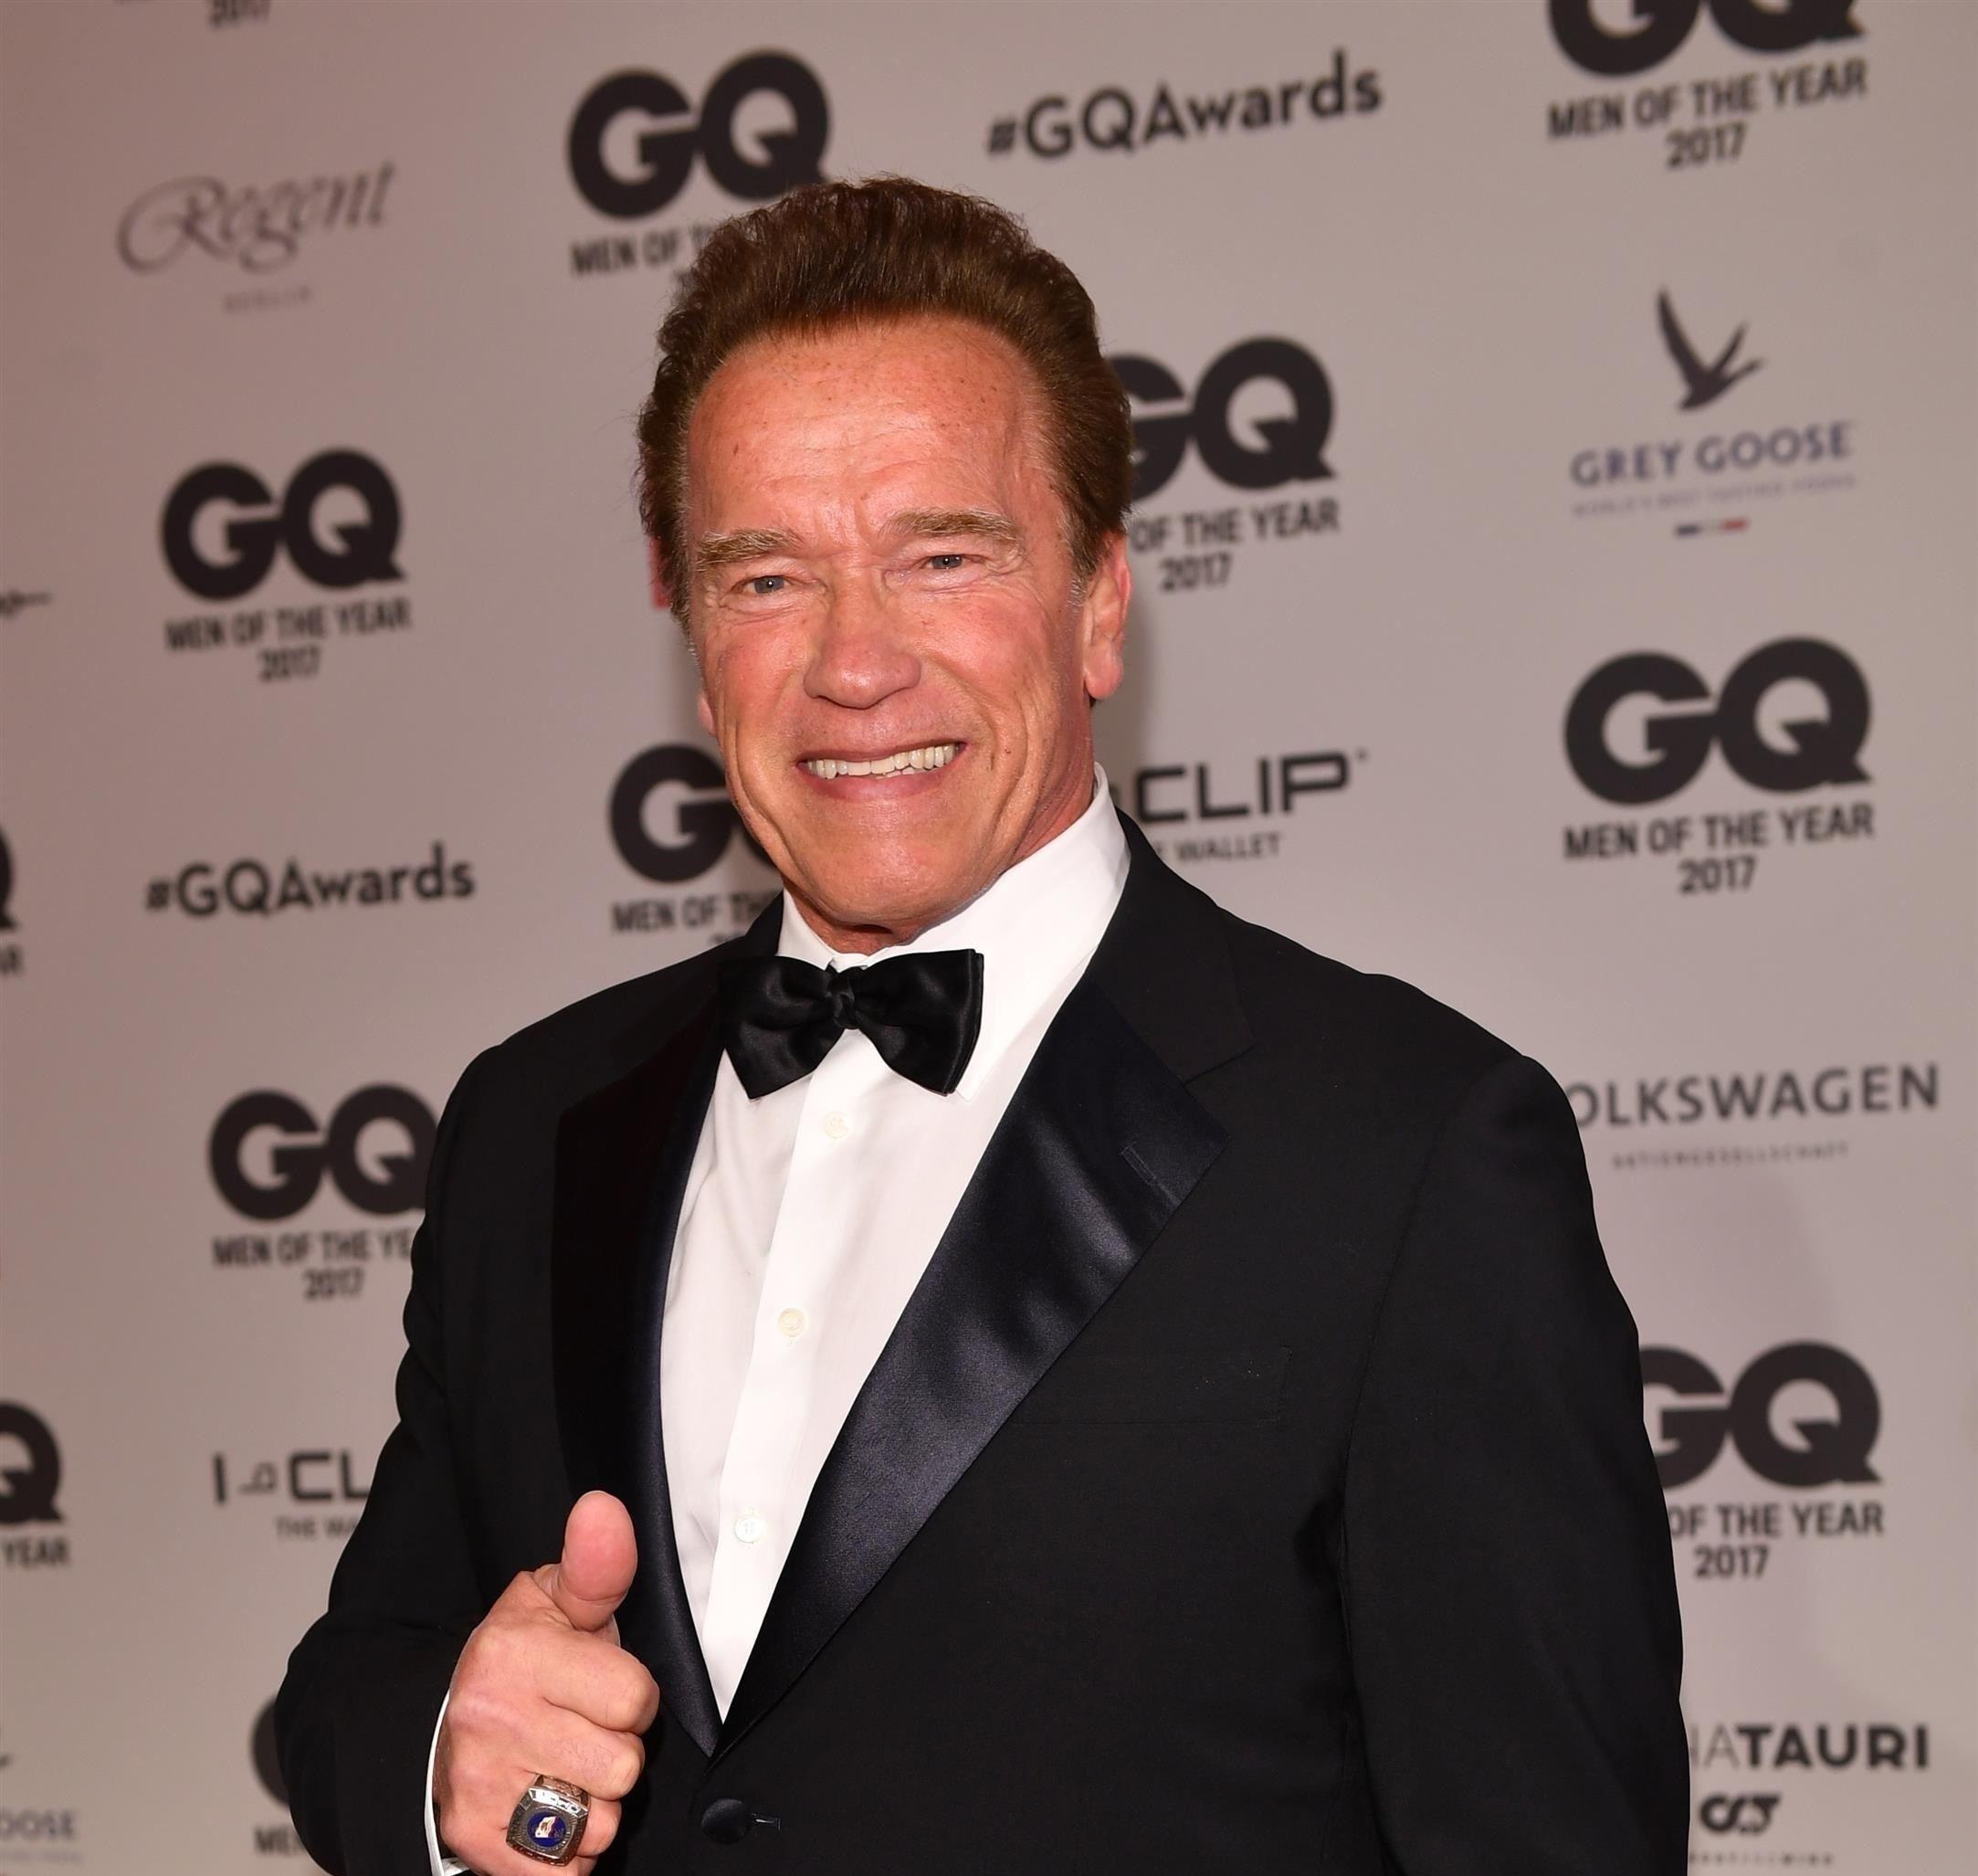 Arnold Schwarzenegger imbracat intr-un costum negru, cu camasa alba si papion negru. Zambeste, se uita la camera si isi arata degetul mare.